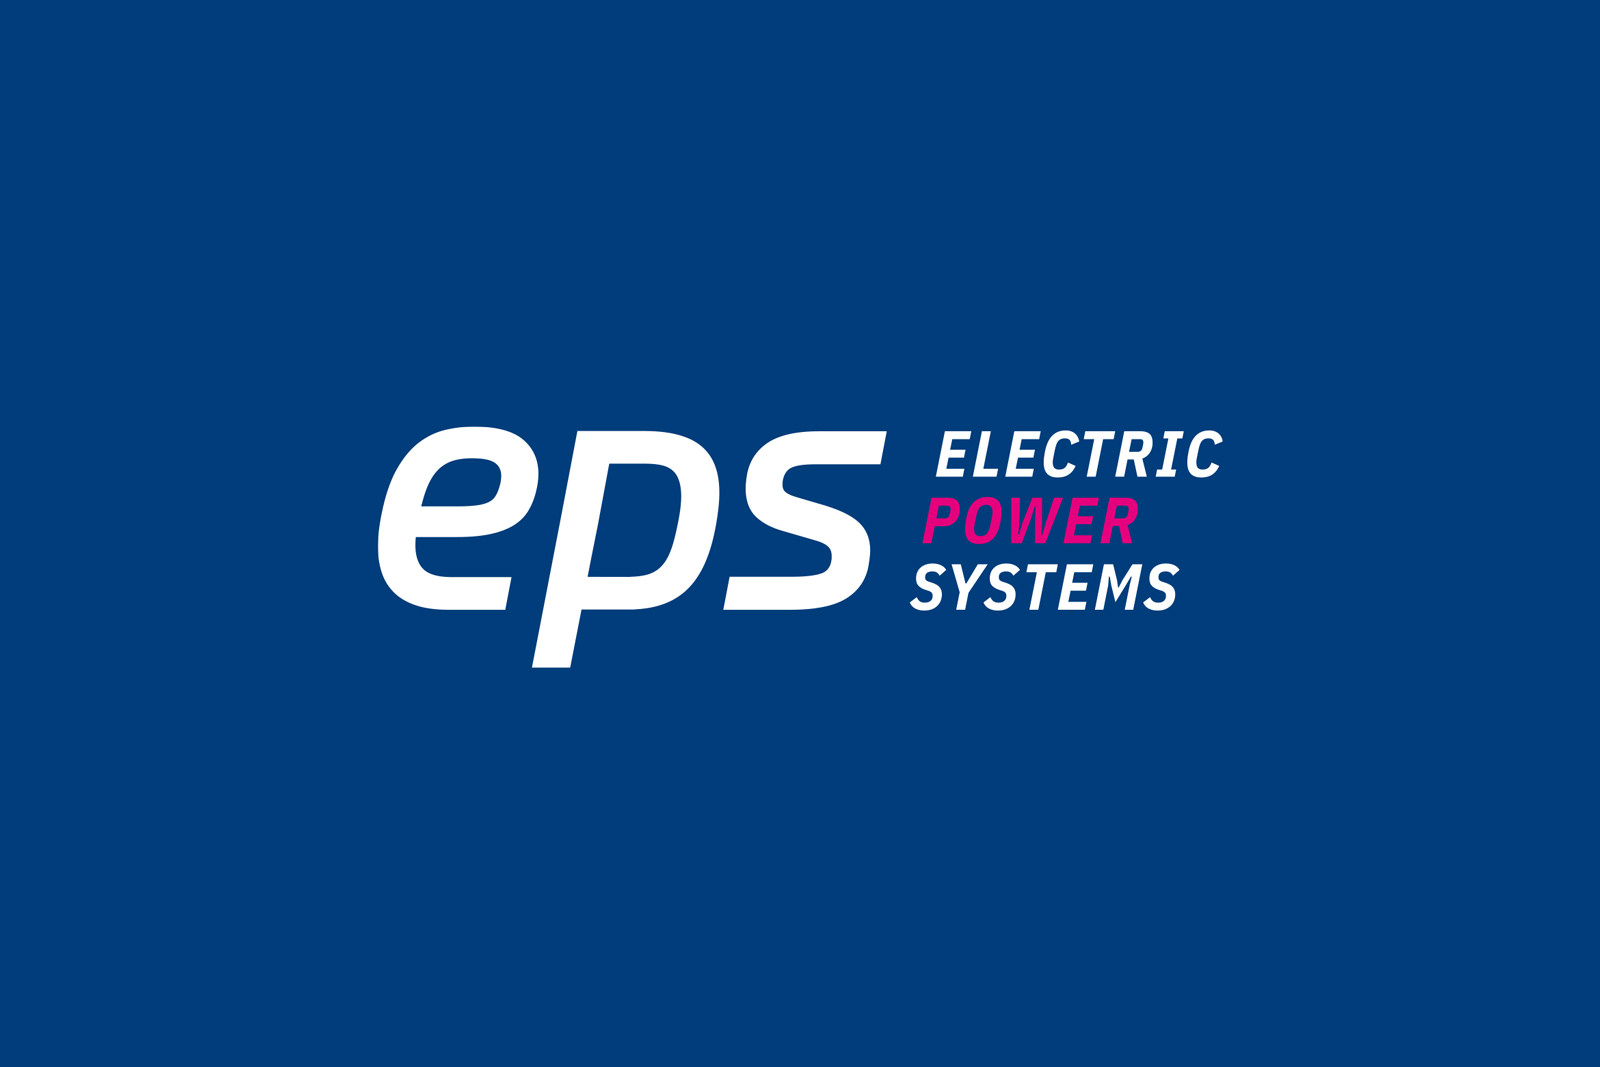 b_eps_logo